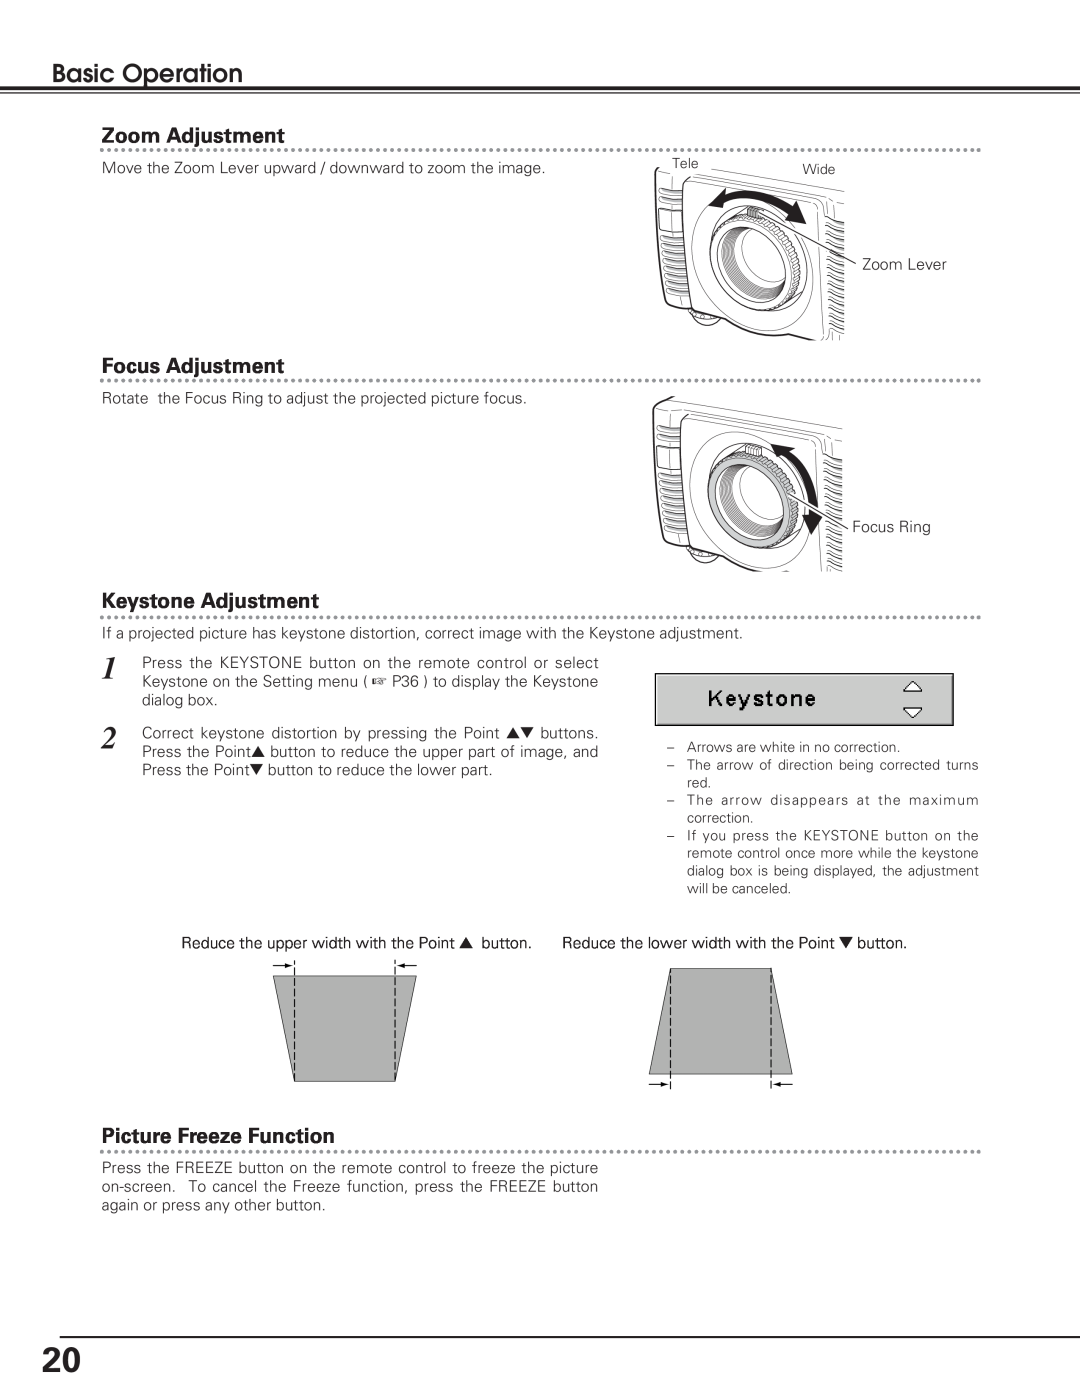 Eiki LC-SD12 owner manual Zoom Adjustment, Focus Adjustment, Keystone Adjustment, Picture Freeze Function, Basic Operation 